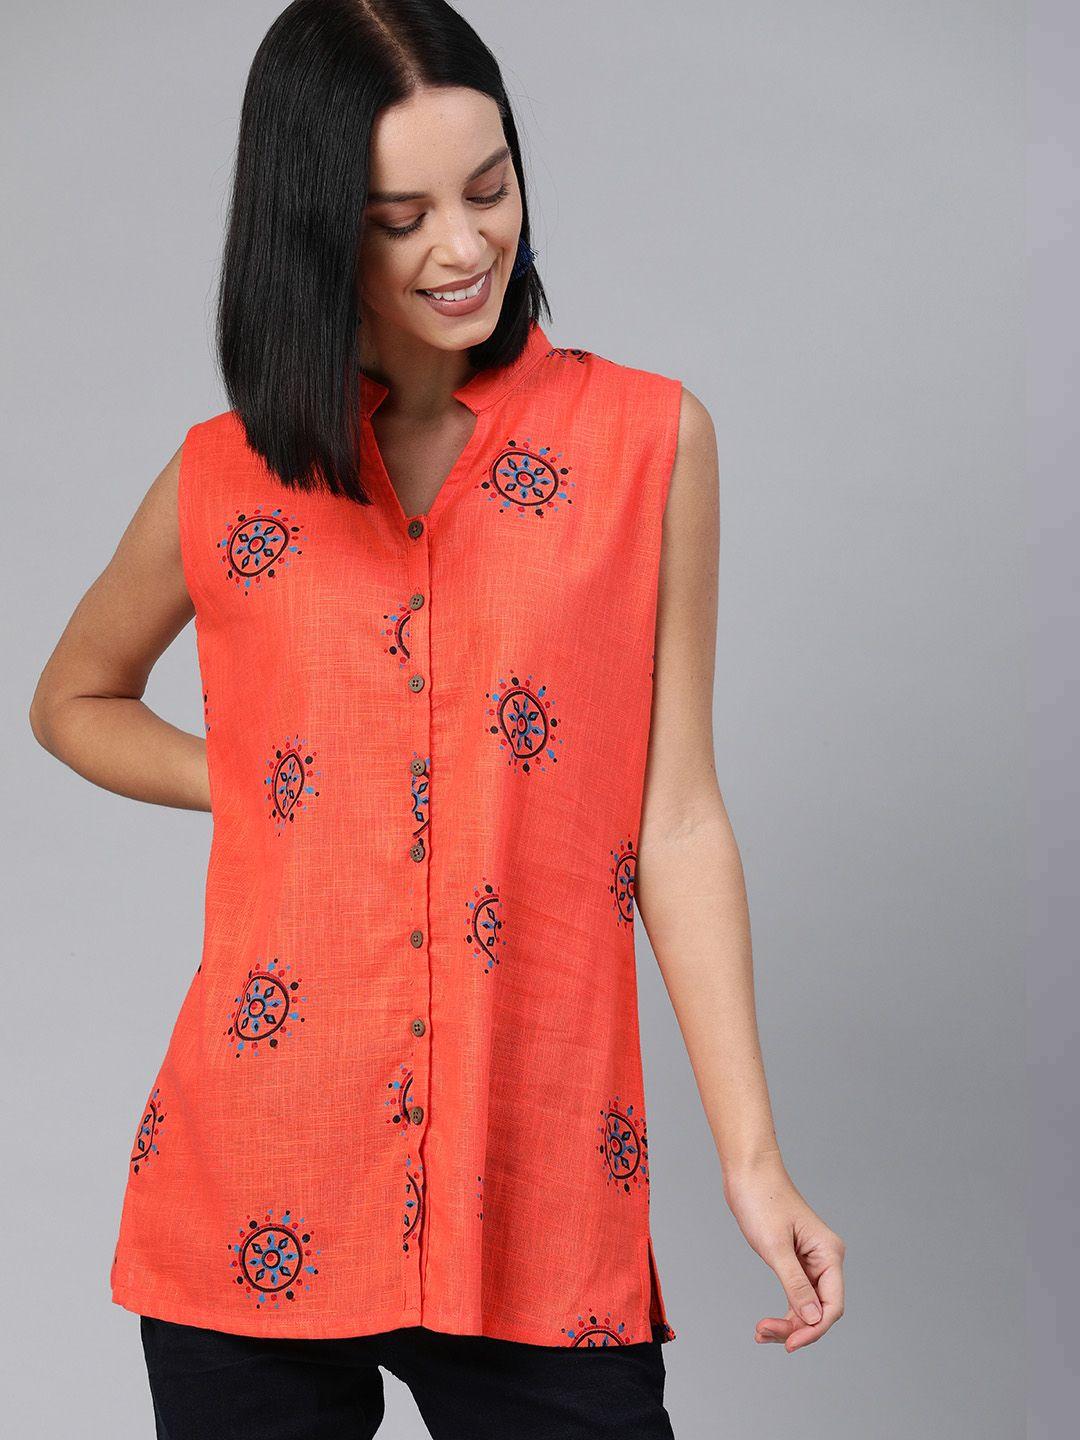 swishchick women's orange ethnic printed tunic